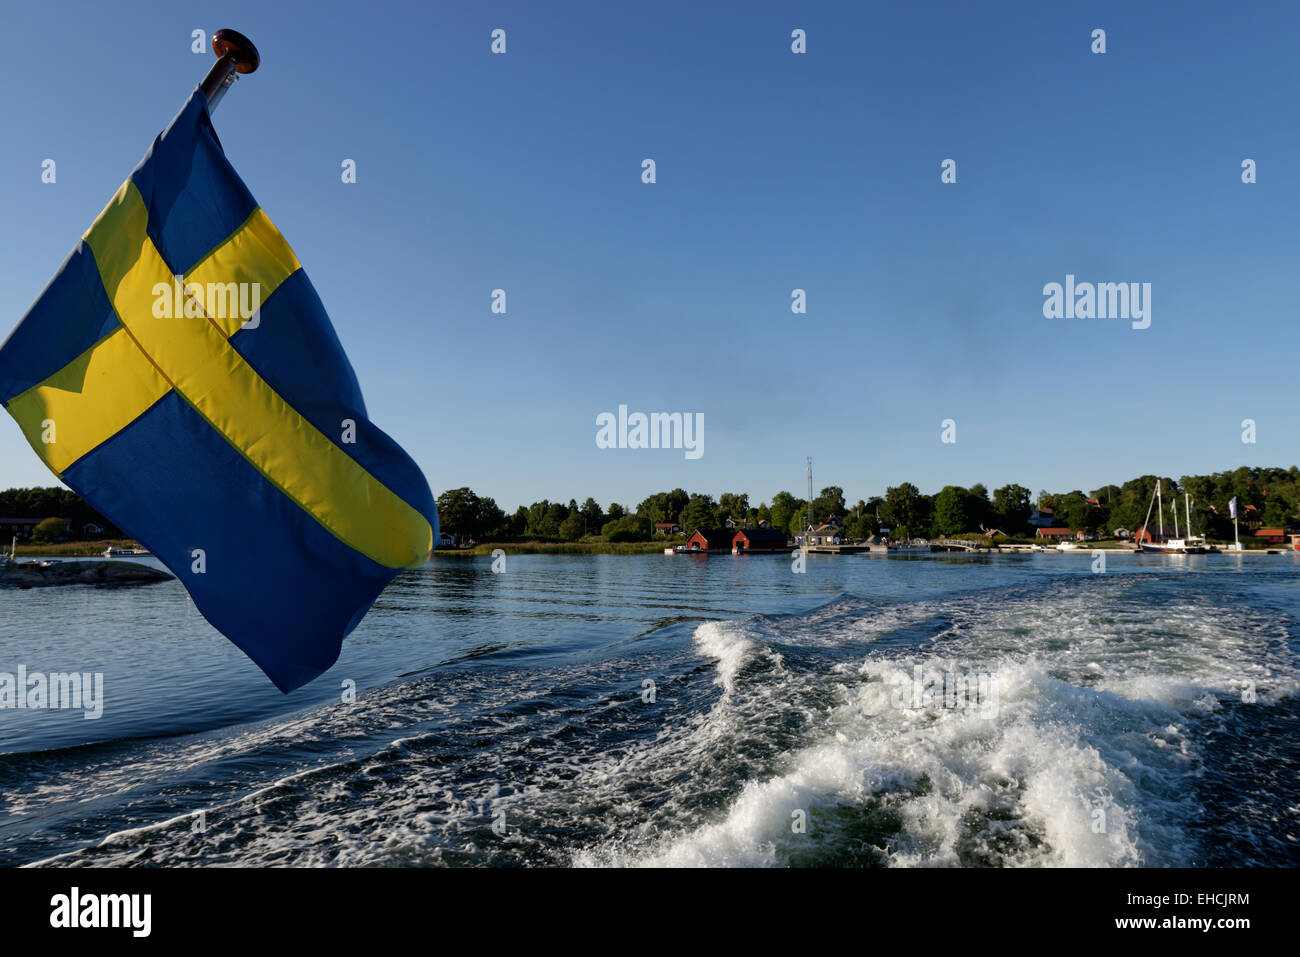 Ship with Swedish flag off Husarö, island in the municipality of Österåker, skärgård, archipelago, Sweden Stock Photo